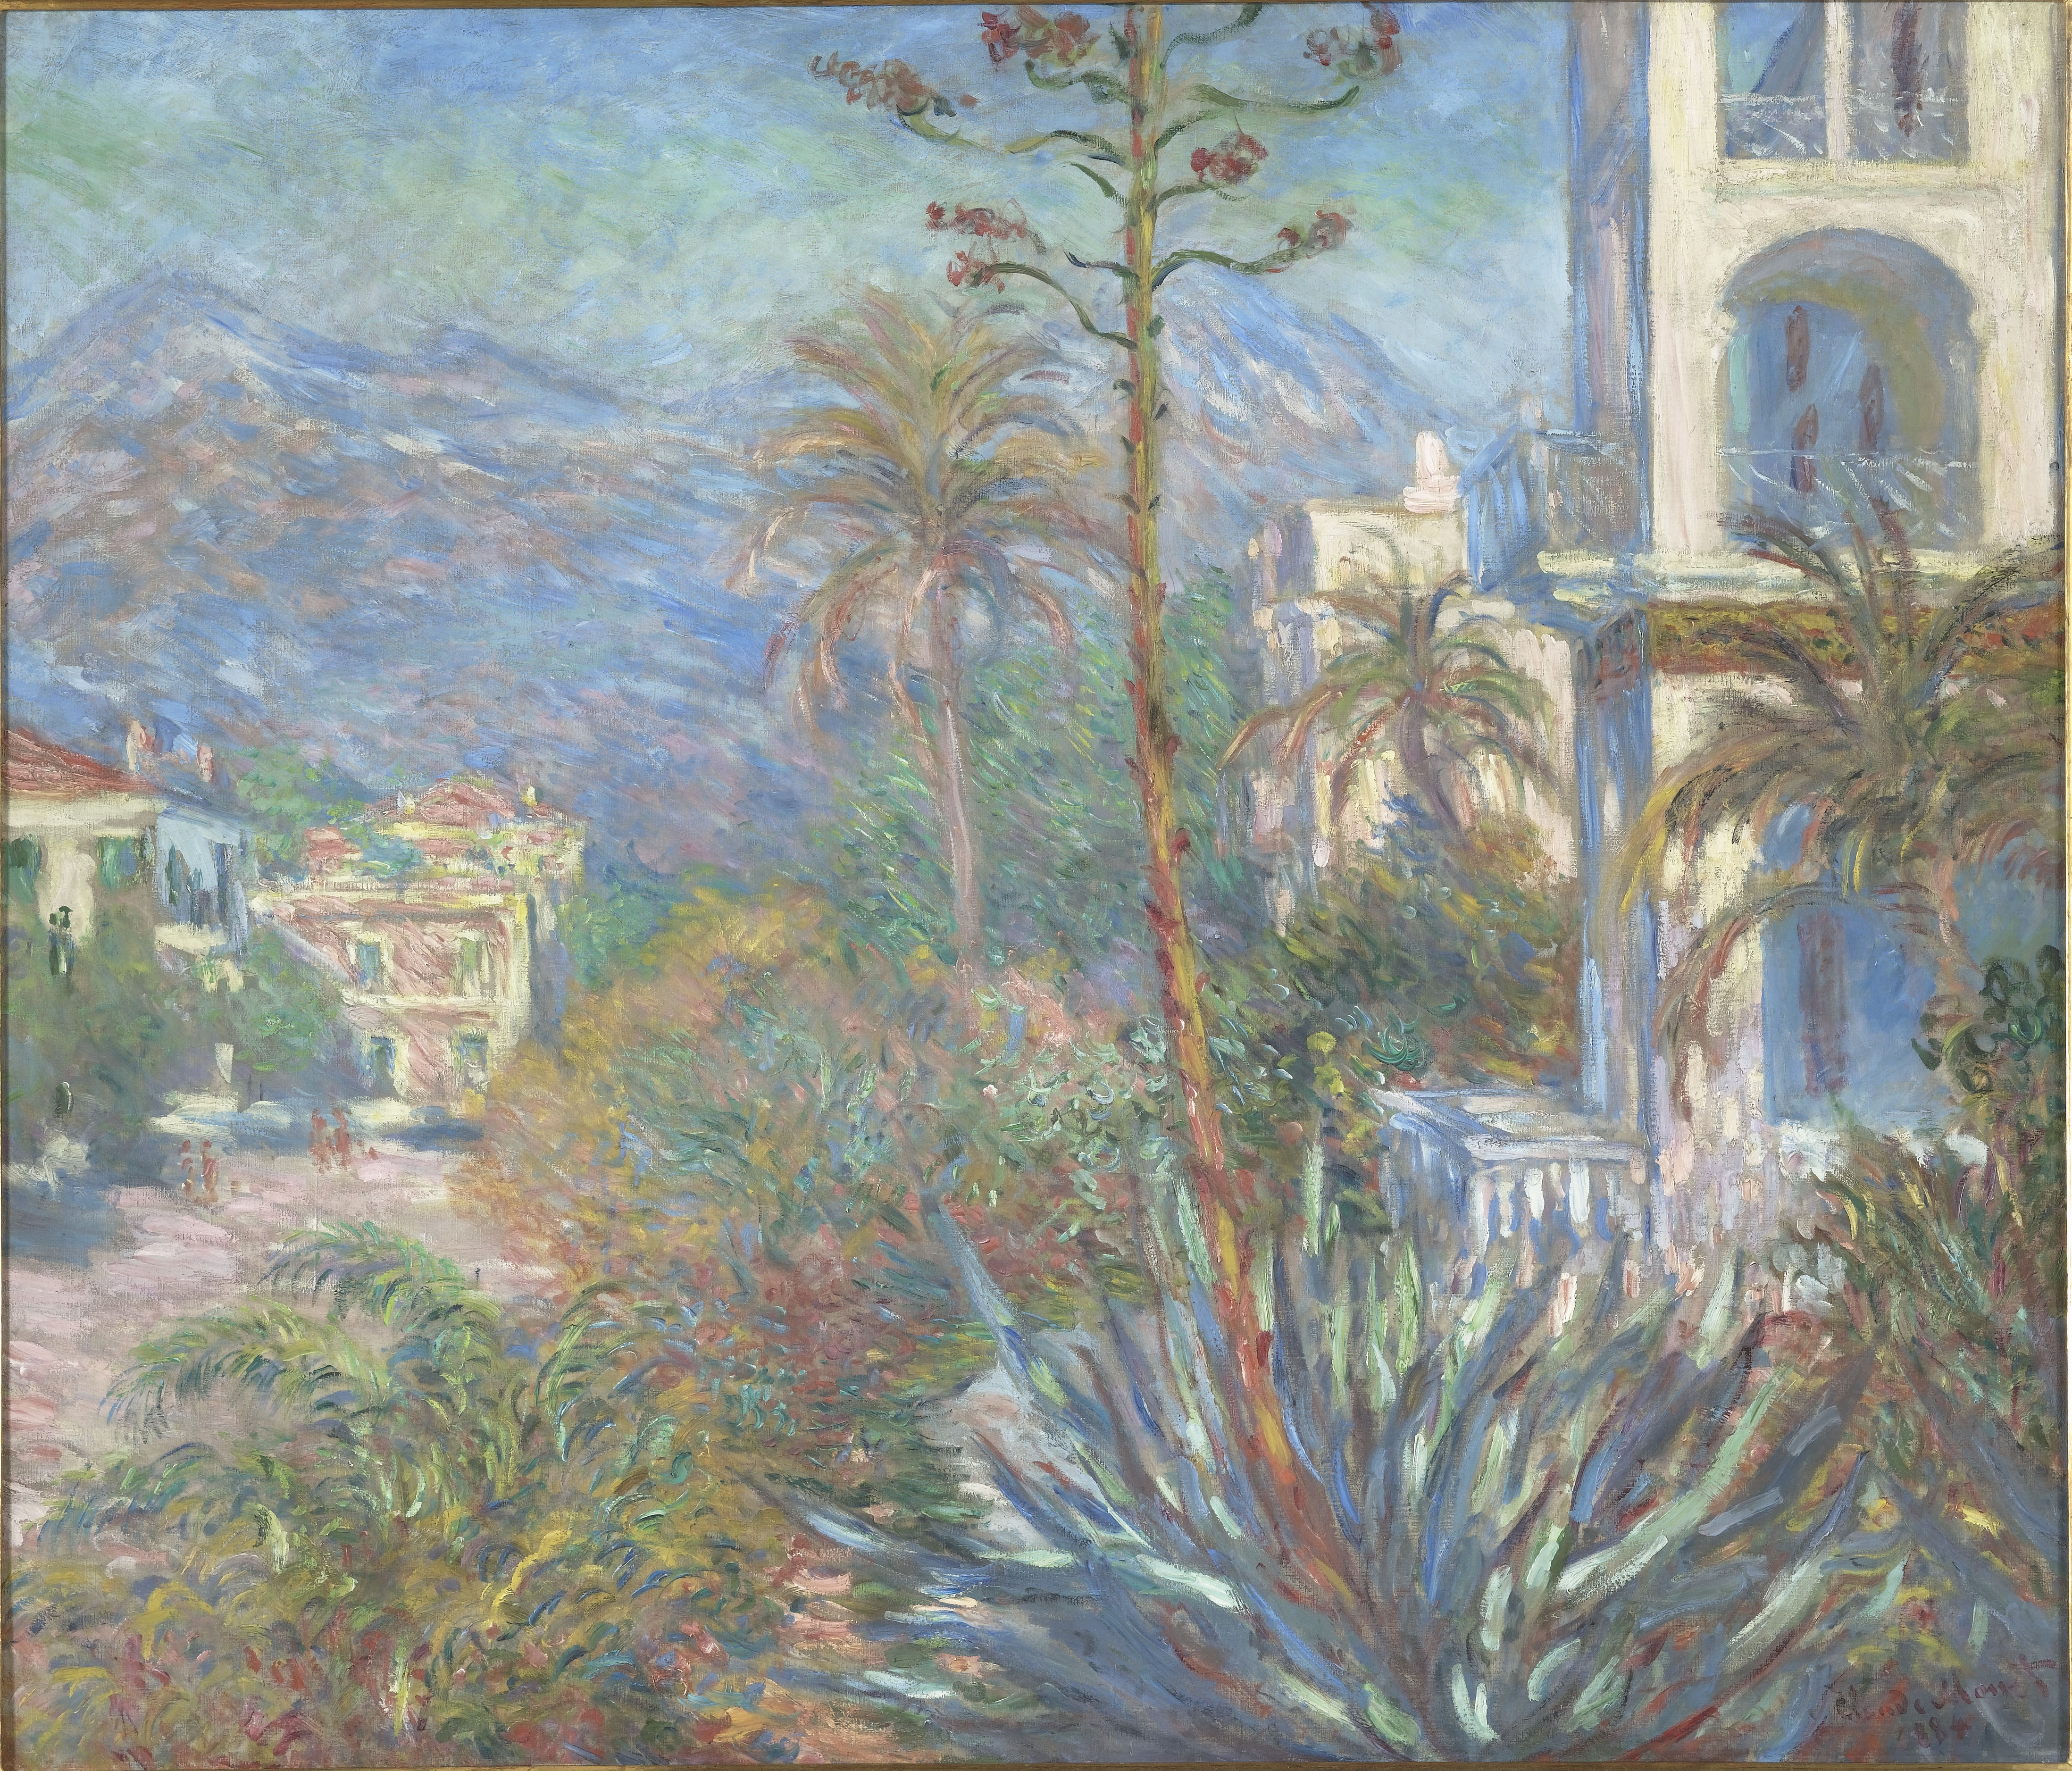 Claude Monet (1840-1926), Les Villas à Bordighera, 1884, Huile sur toile, 116,5 x 136,5 cm, Paris, musée d'Orsay, RF2000-94, © RMN-Grand Palais (musée d'Orsay) / Hervé Lewandowski